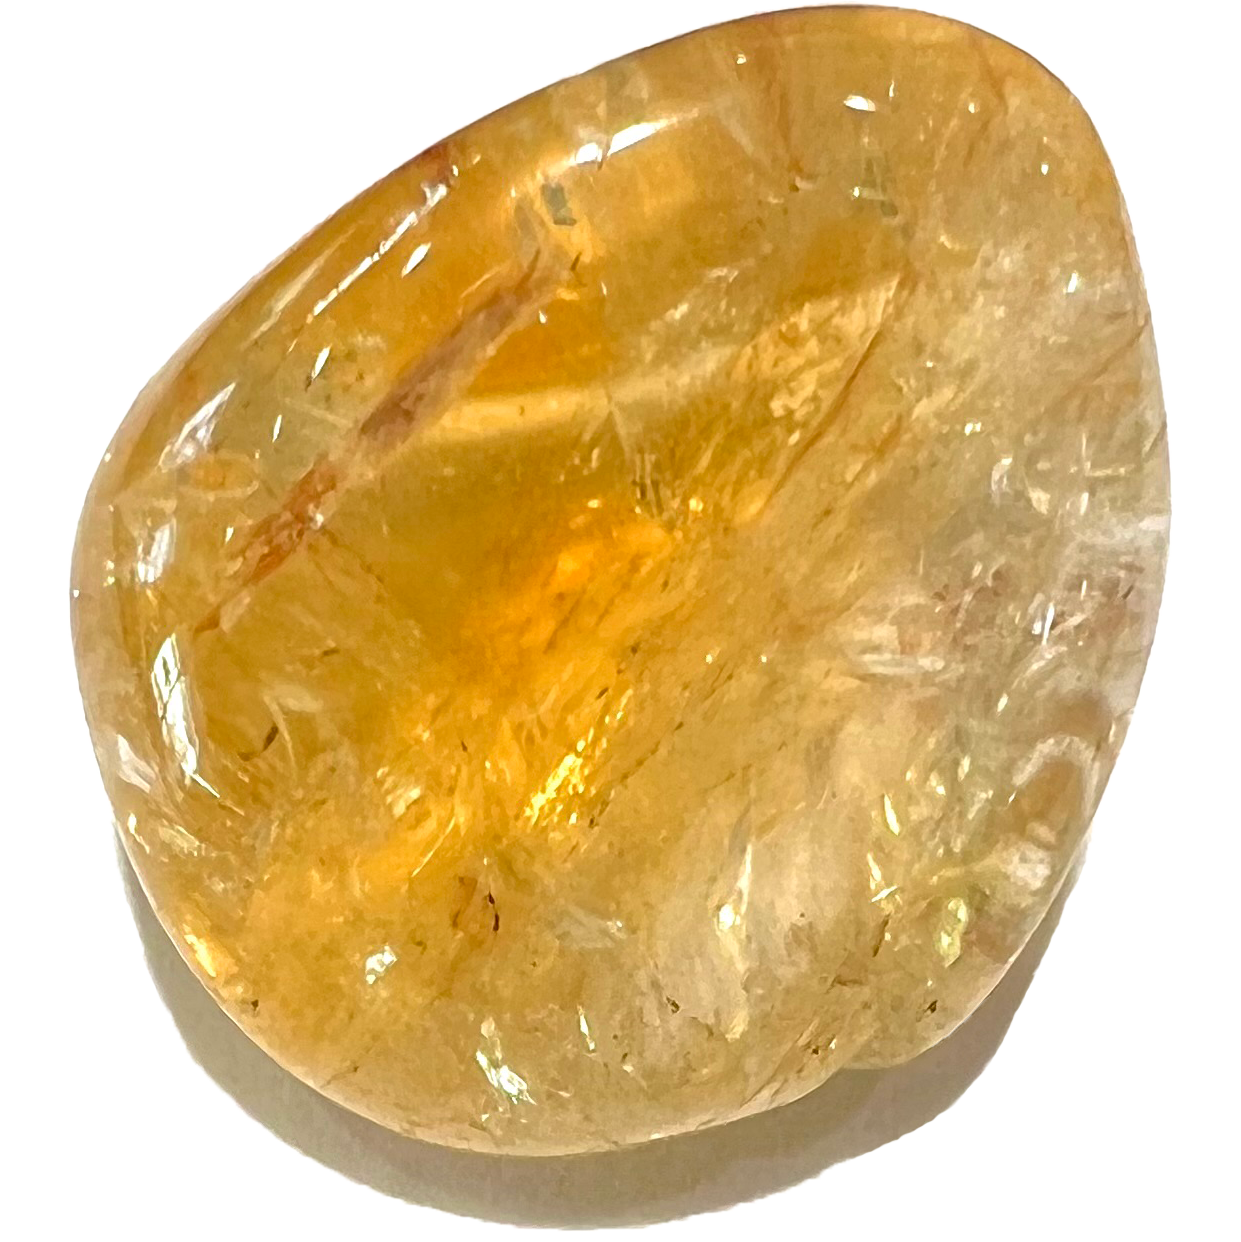 A transparent, yellow, tumbled citrine stone.